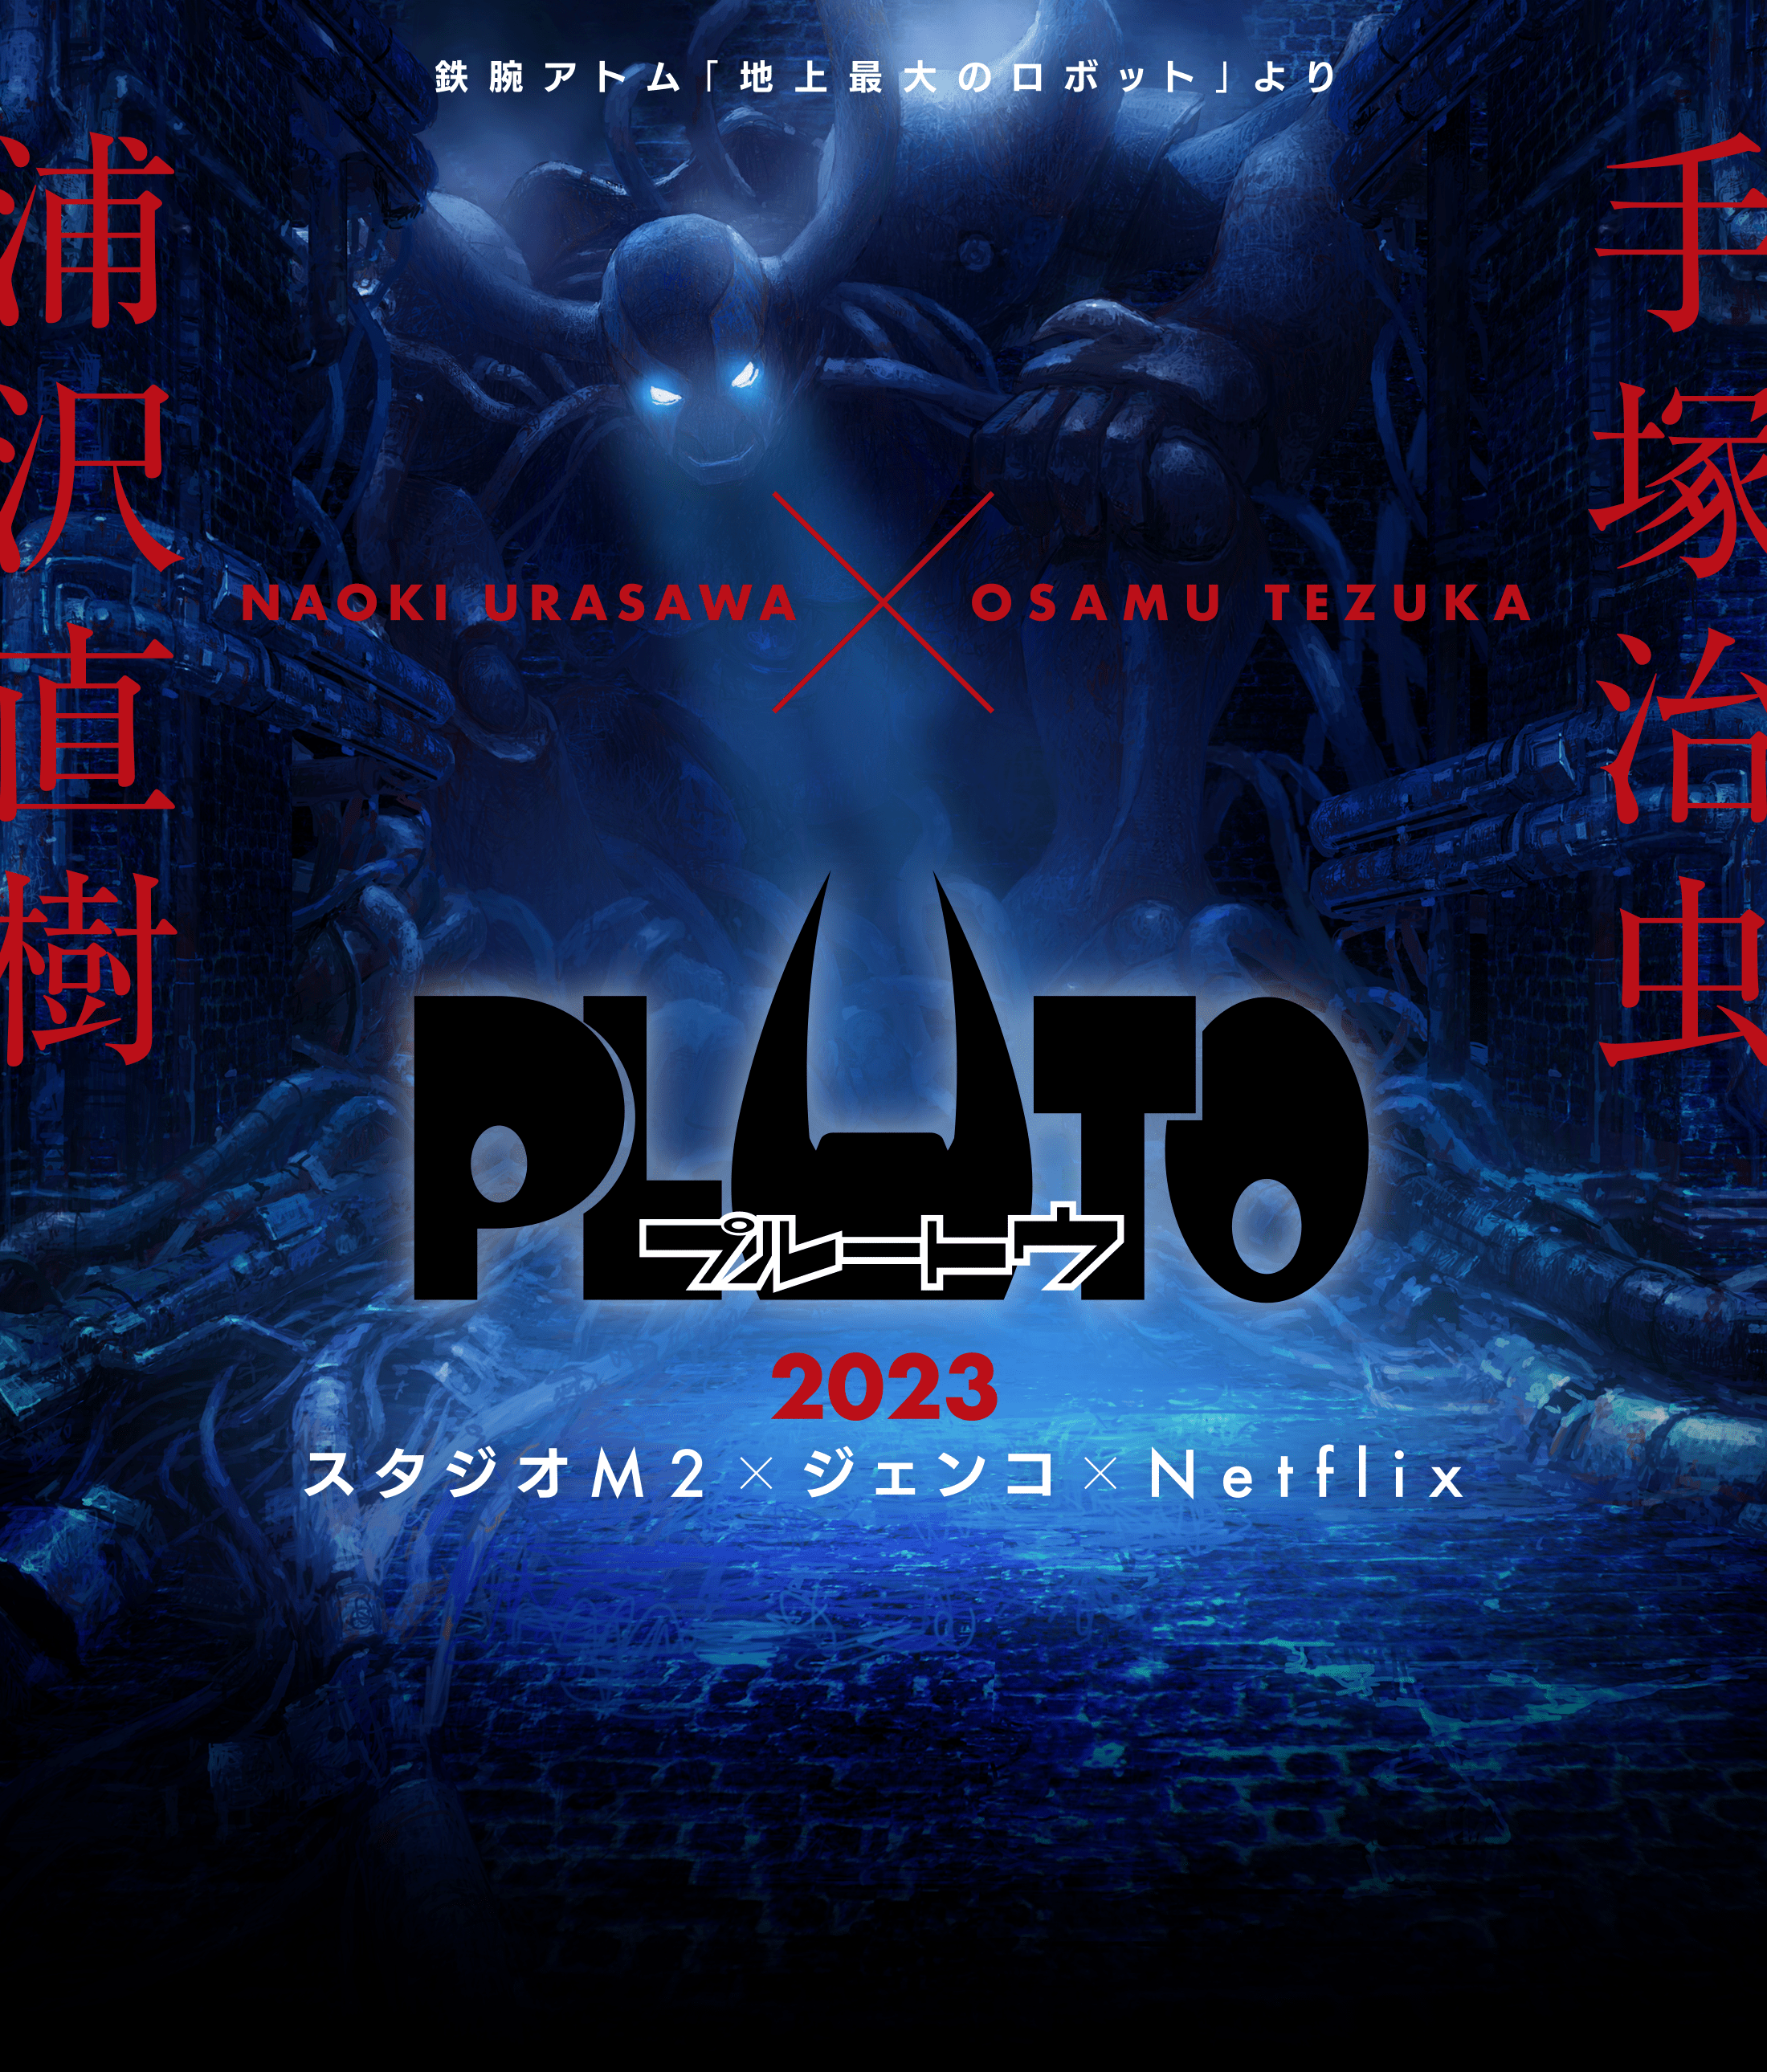 Pluto anime